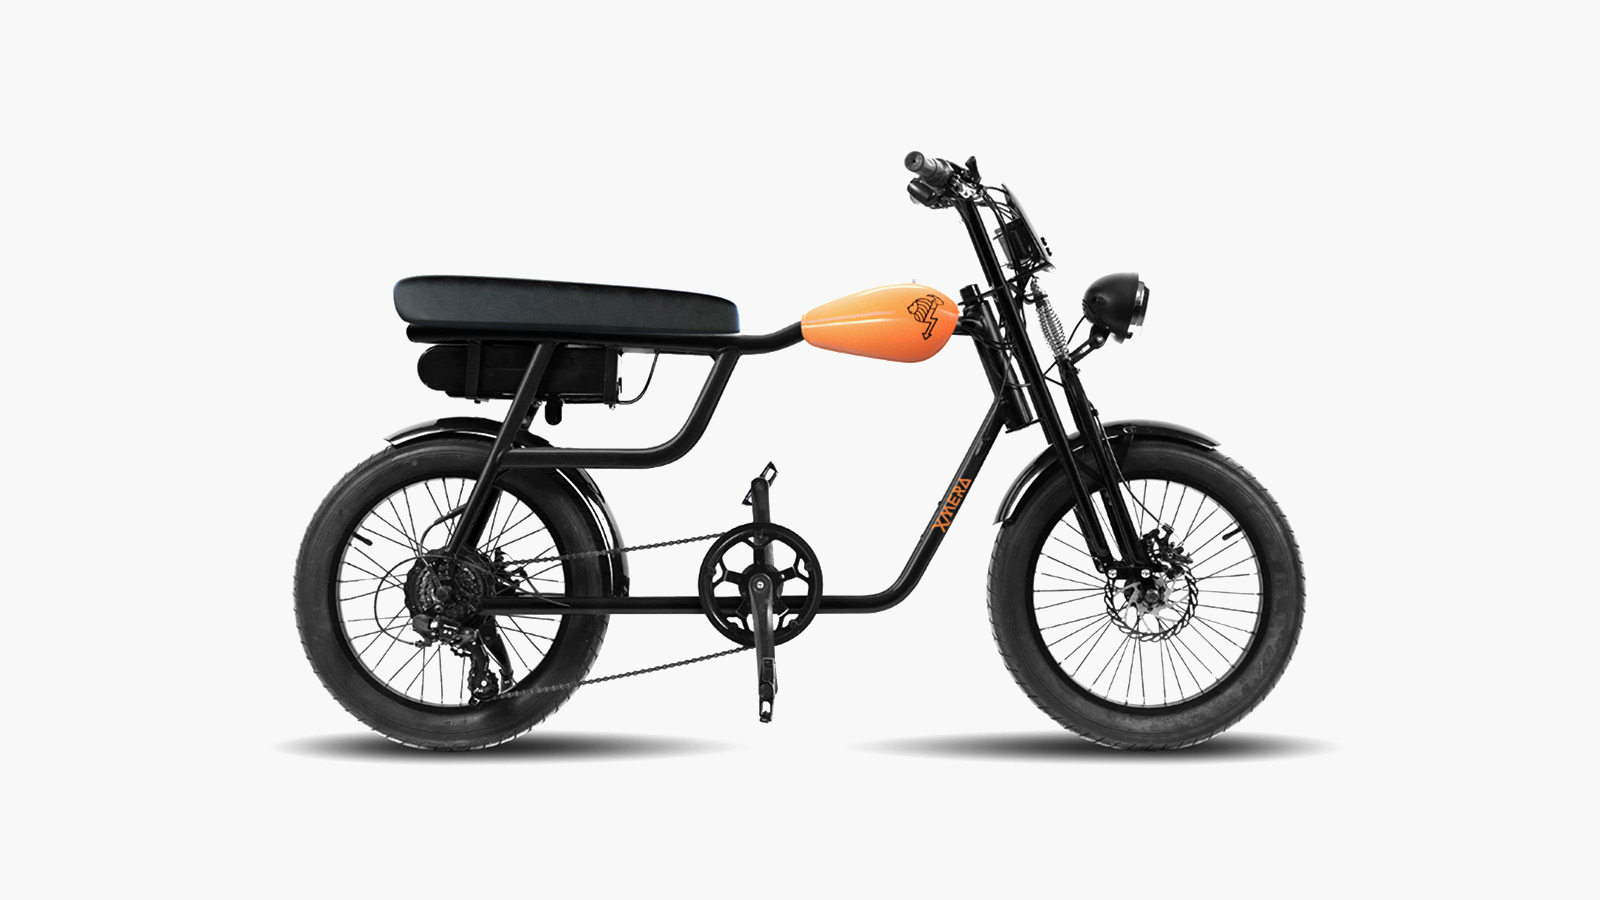 Xmera Bionic Bike